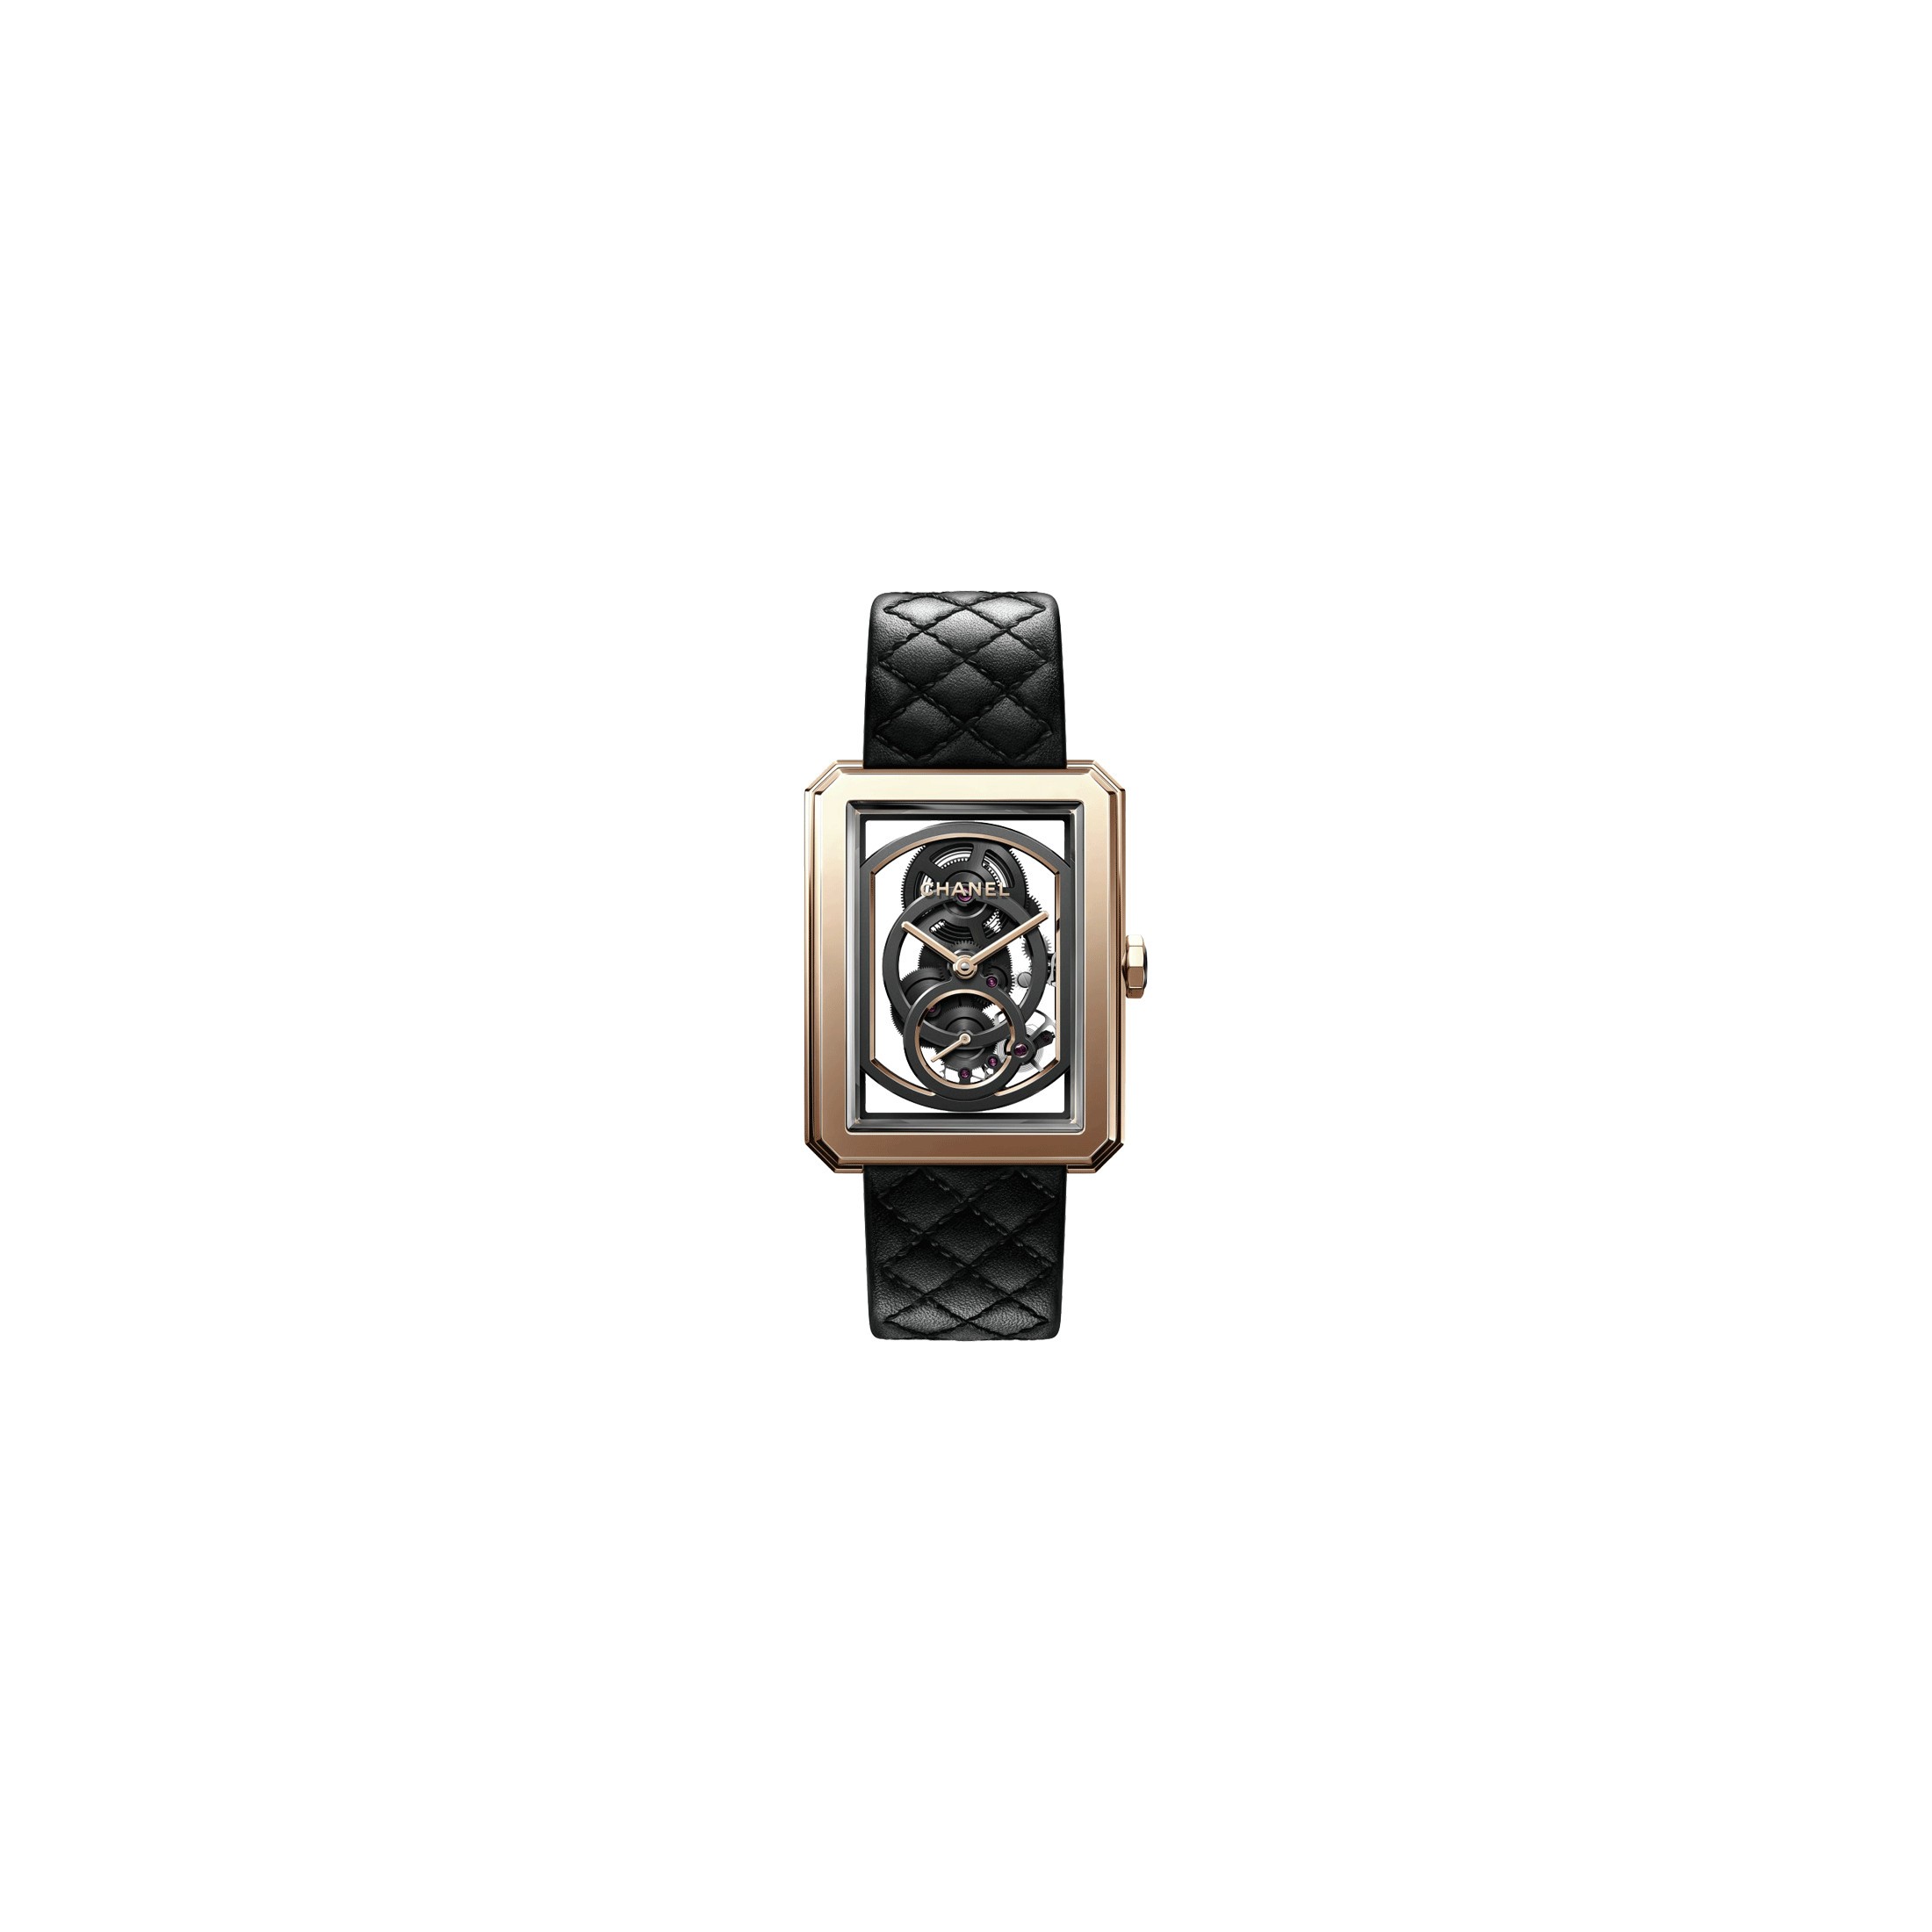 Đồng hồ Chanel Boy-Friend H5315 Opaline Dial Diamond